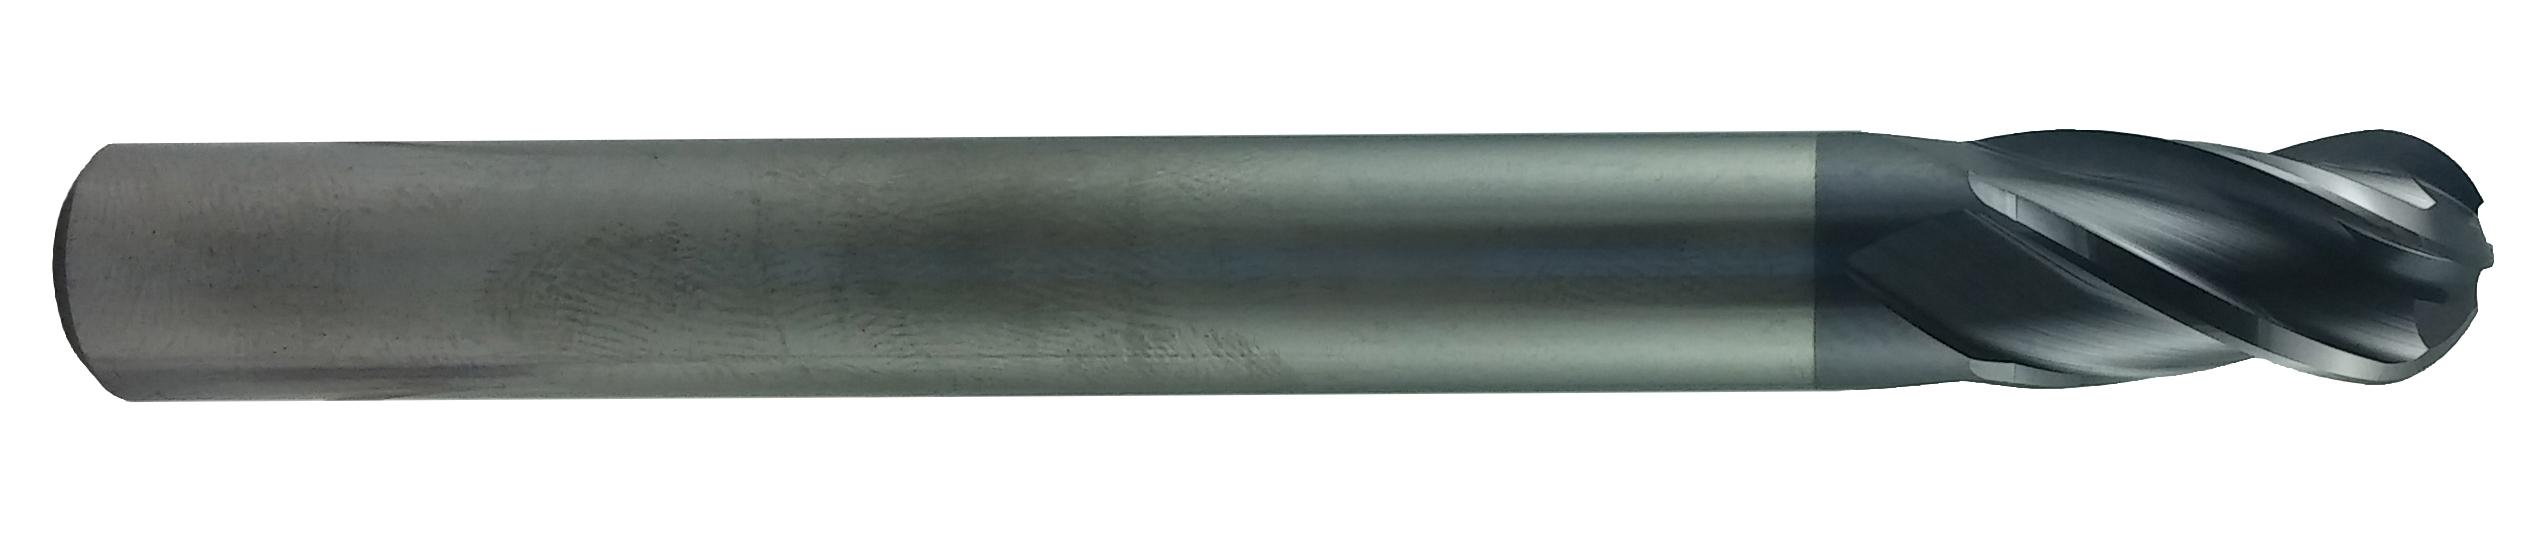 3/8 Shank Diameter Titanium Nitride Coating SGS 31908 1ELB 4 Flute Ball End General Purpose End Mill 1-3/4 Cutting Length 4 Length 3/8 Cutting Diameter 1-3/4 Cutting Length 3/8 Shank Diameter 4 Length SGS Tool Co. 3/8 Cutting Diameter 